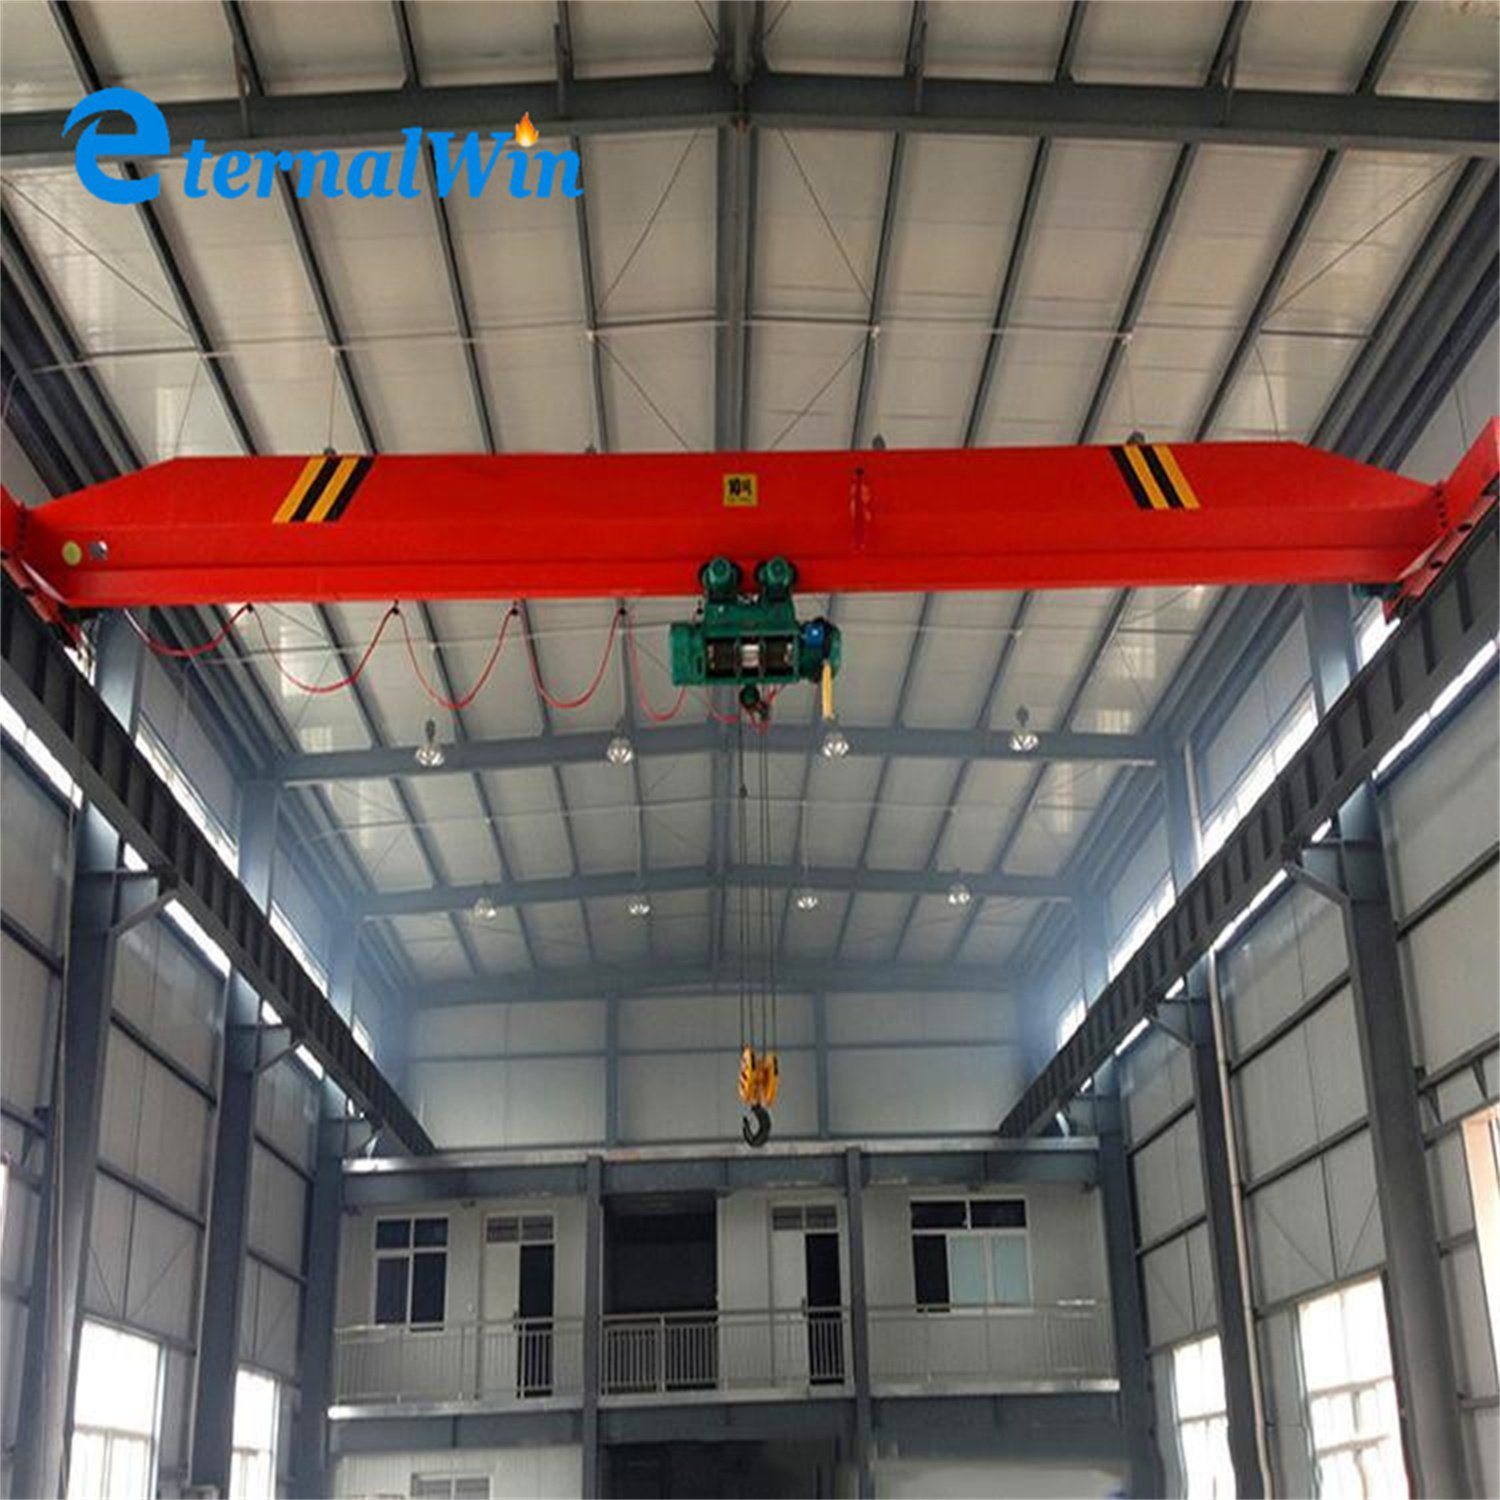 China Eot Crane Supplier Safe Driving Single Girder Overhead Bridge Crane Supplier